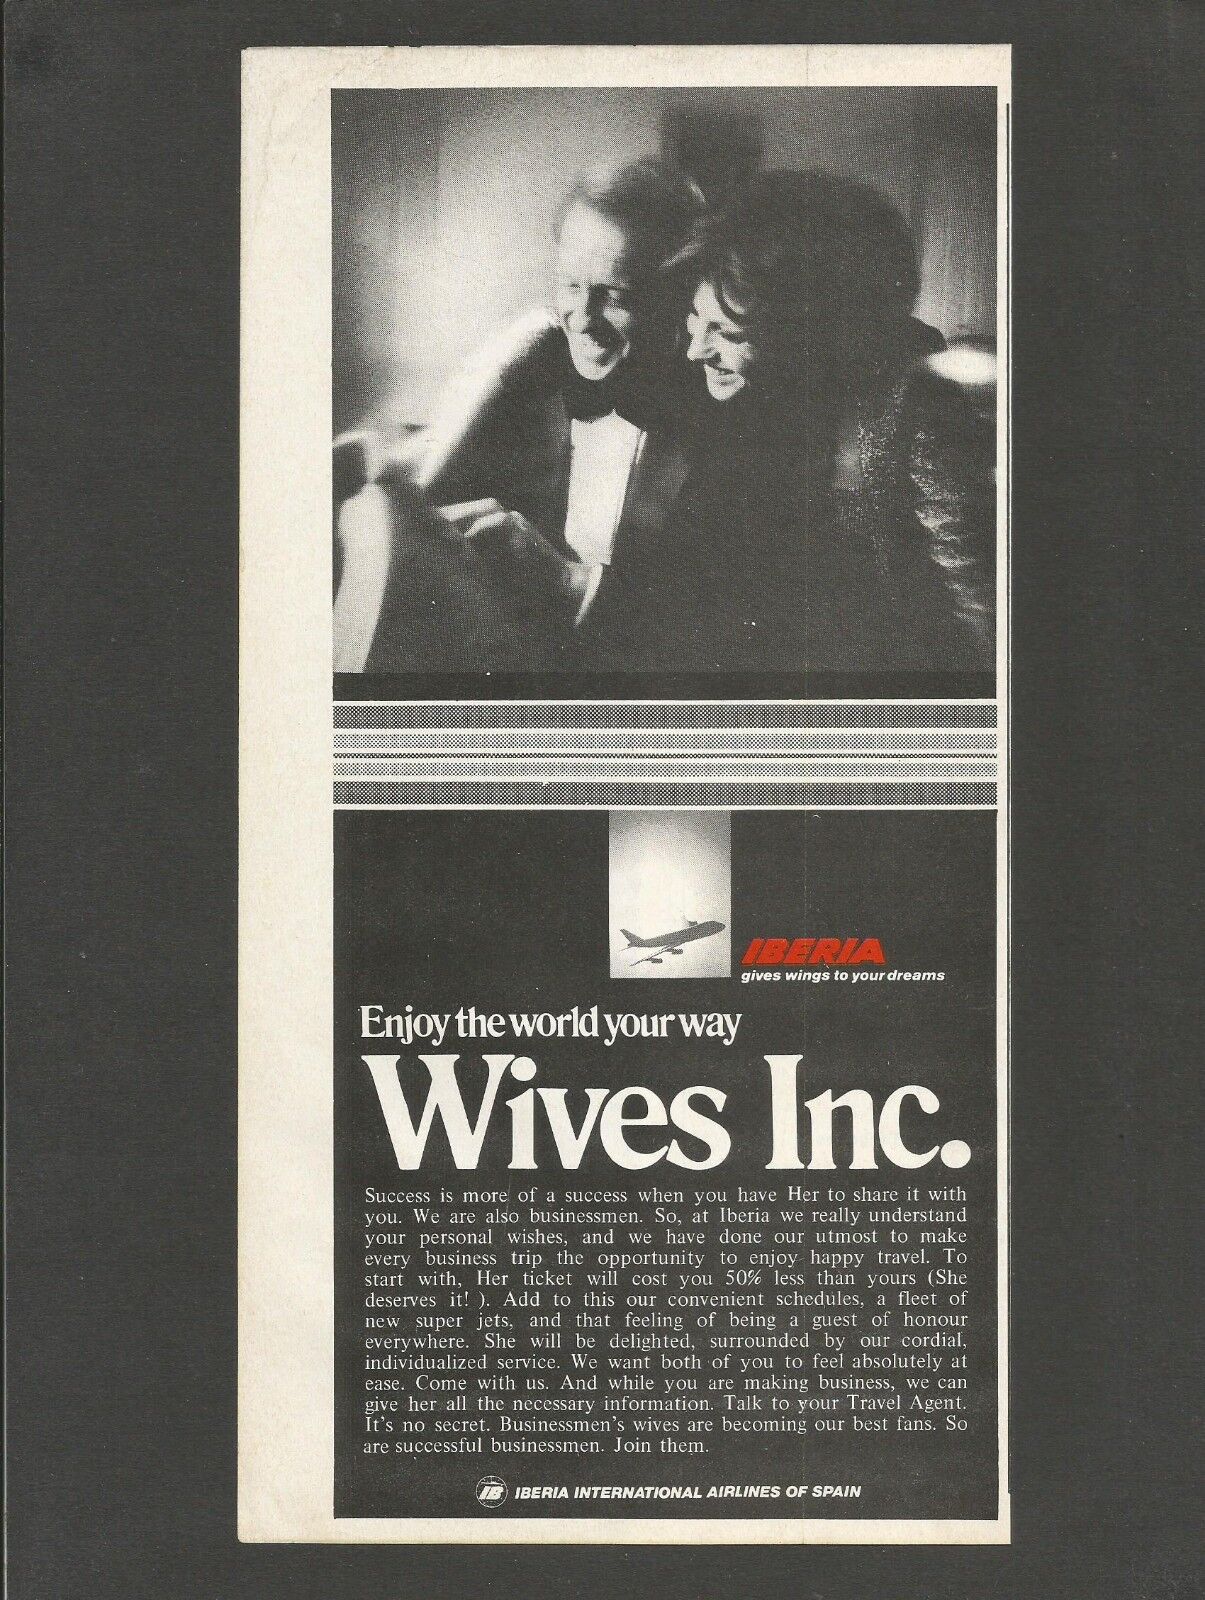 IBERIA International Airlines of Spain- Wives Inc. - 1974 Vintage Print Ad